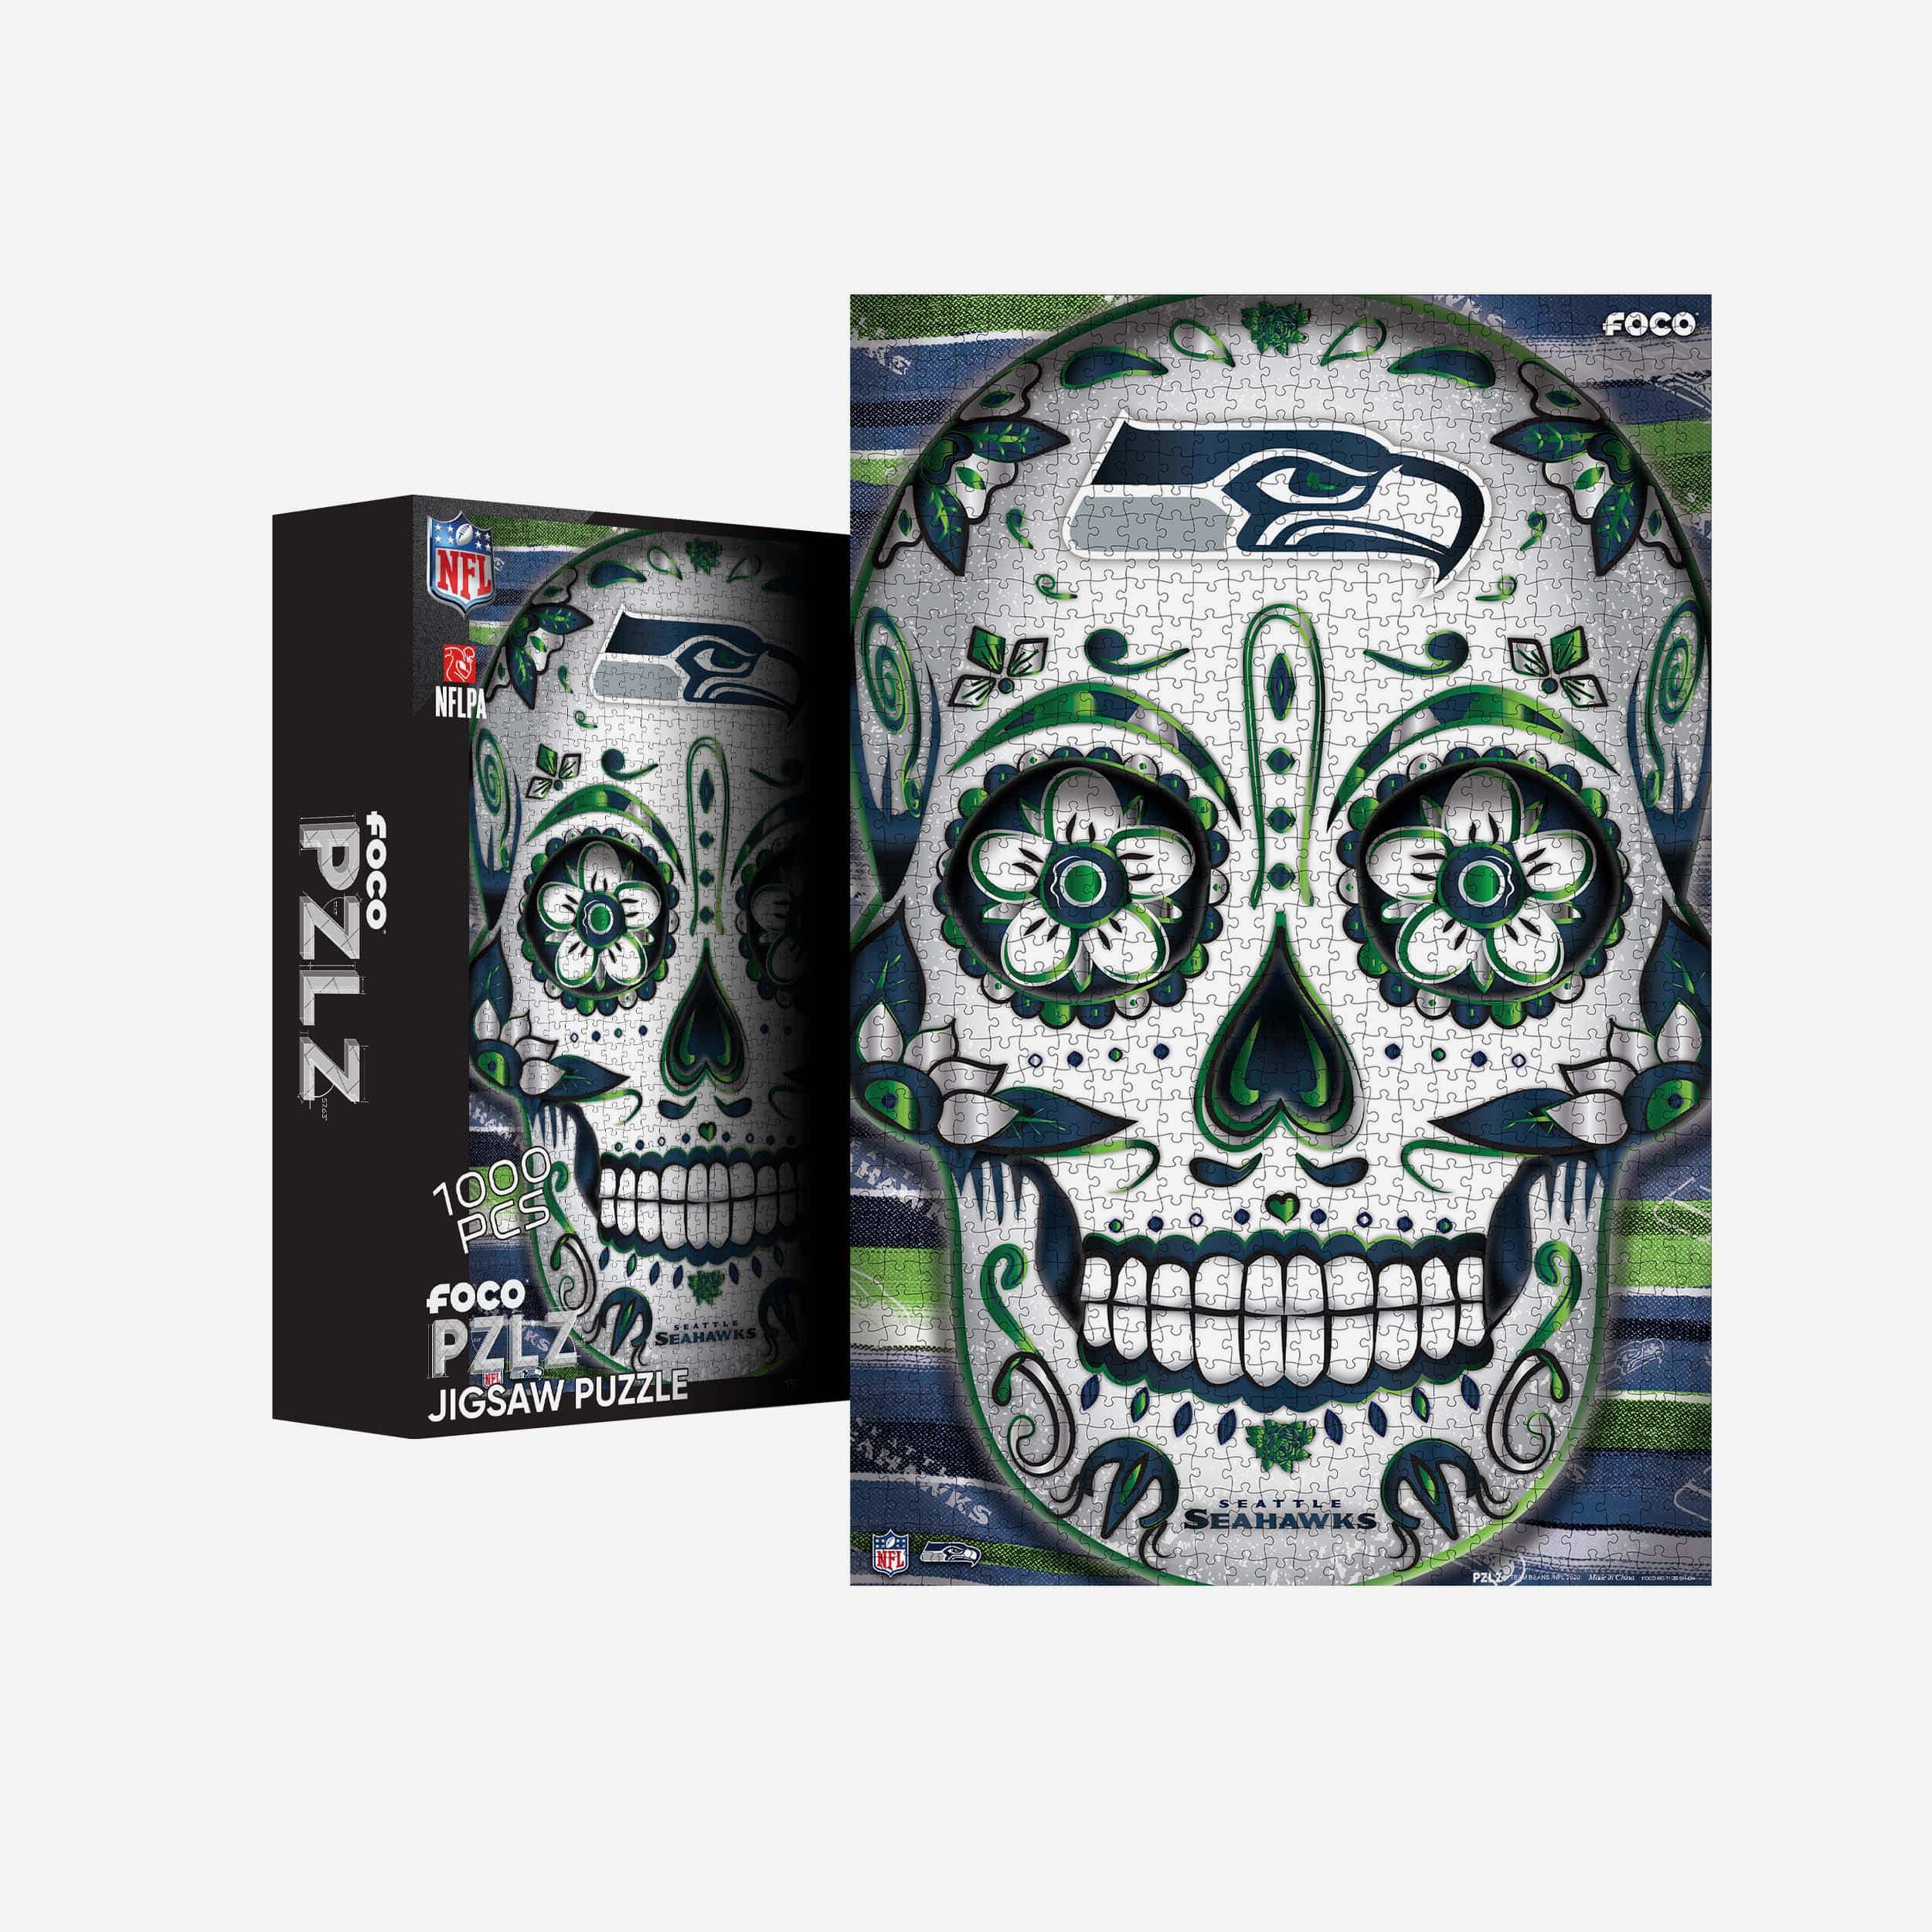 FOCO Seattle Seahawks Sugar Skull 1000 Piece Jigsaw Puzzle PZLZ -